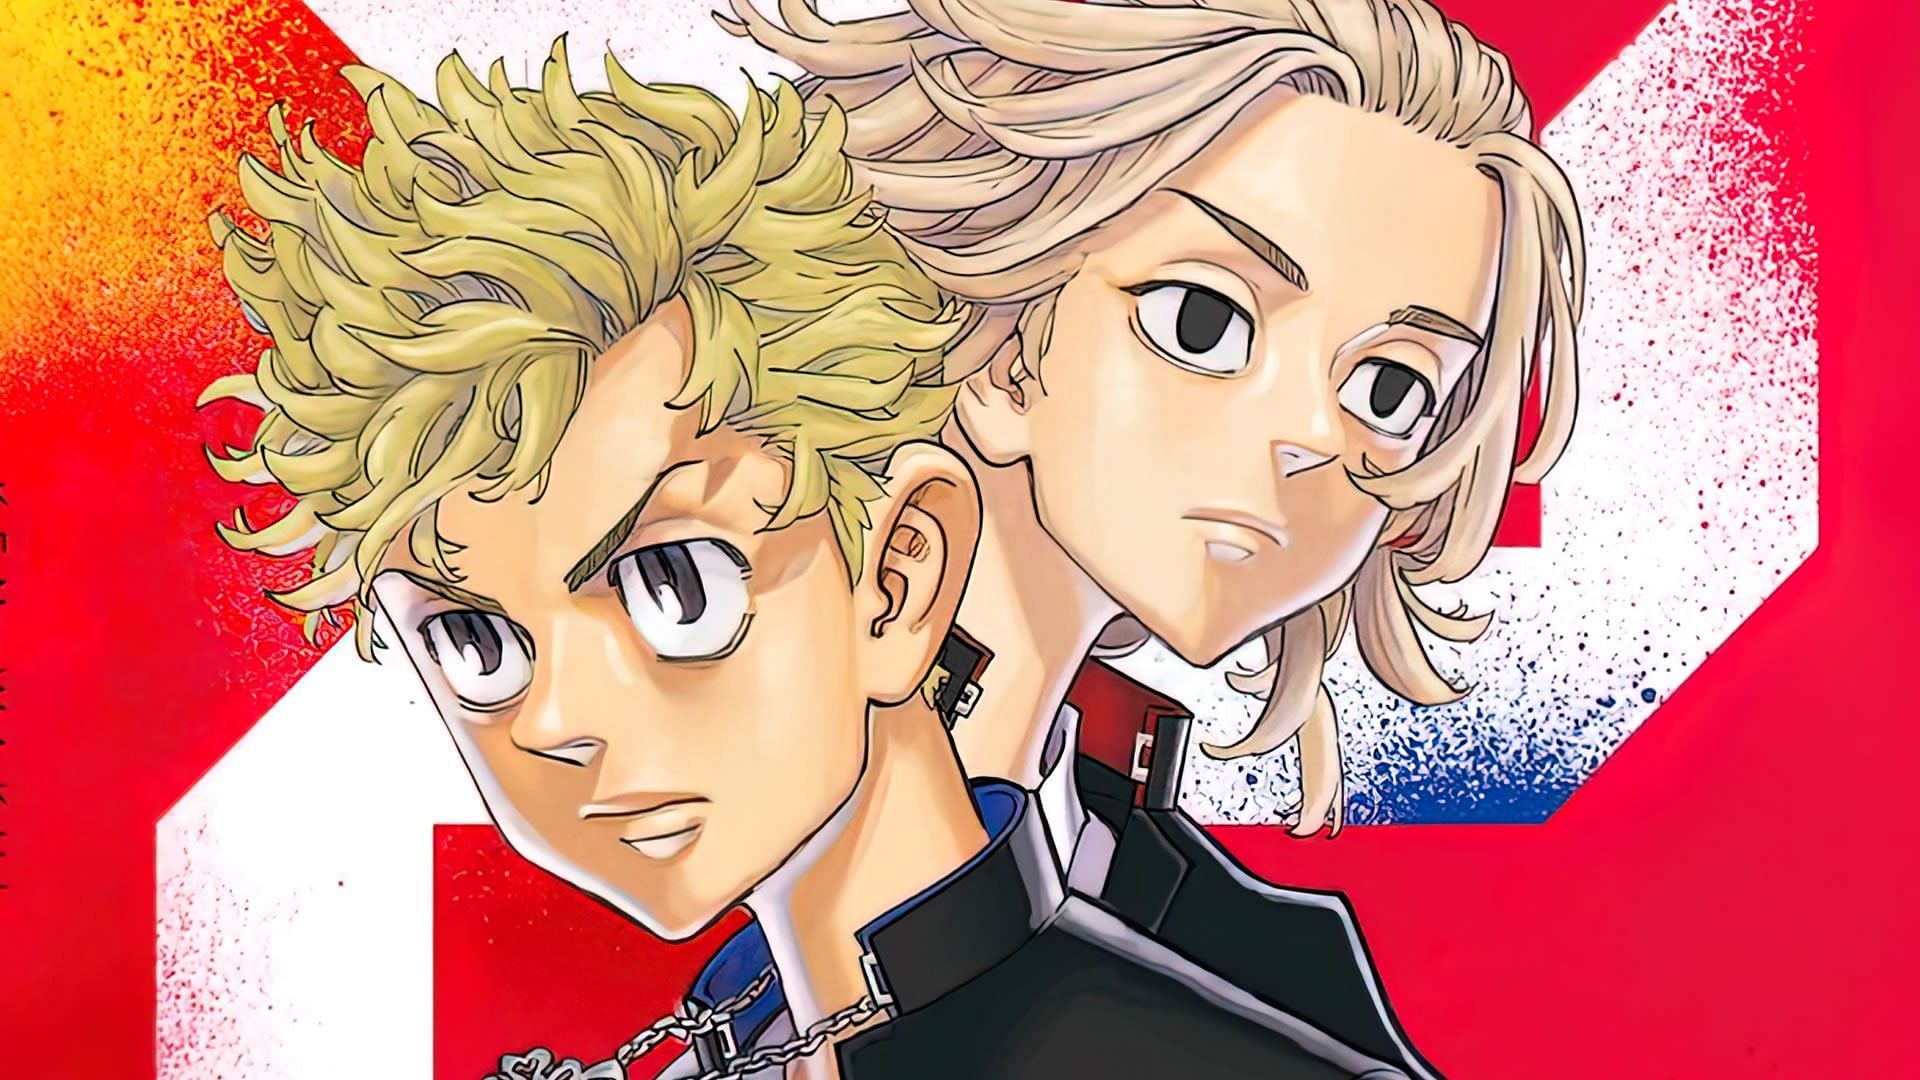 Takemichi and Mikey as seen in the manga (Image via Ken Wakui/Kodansha, Tokyo Revengers)